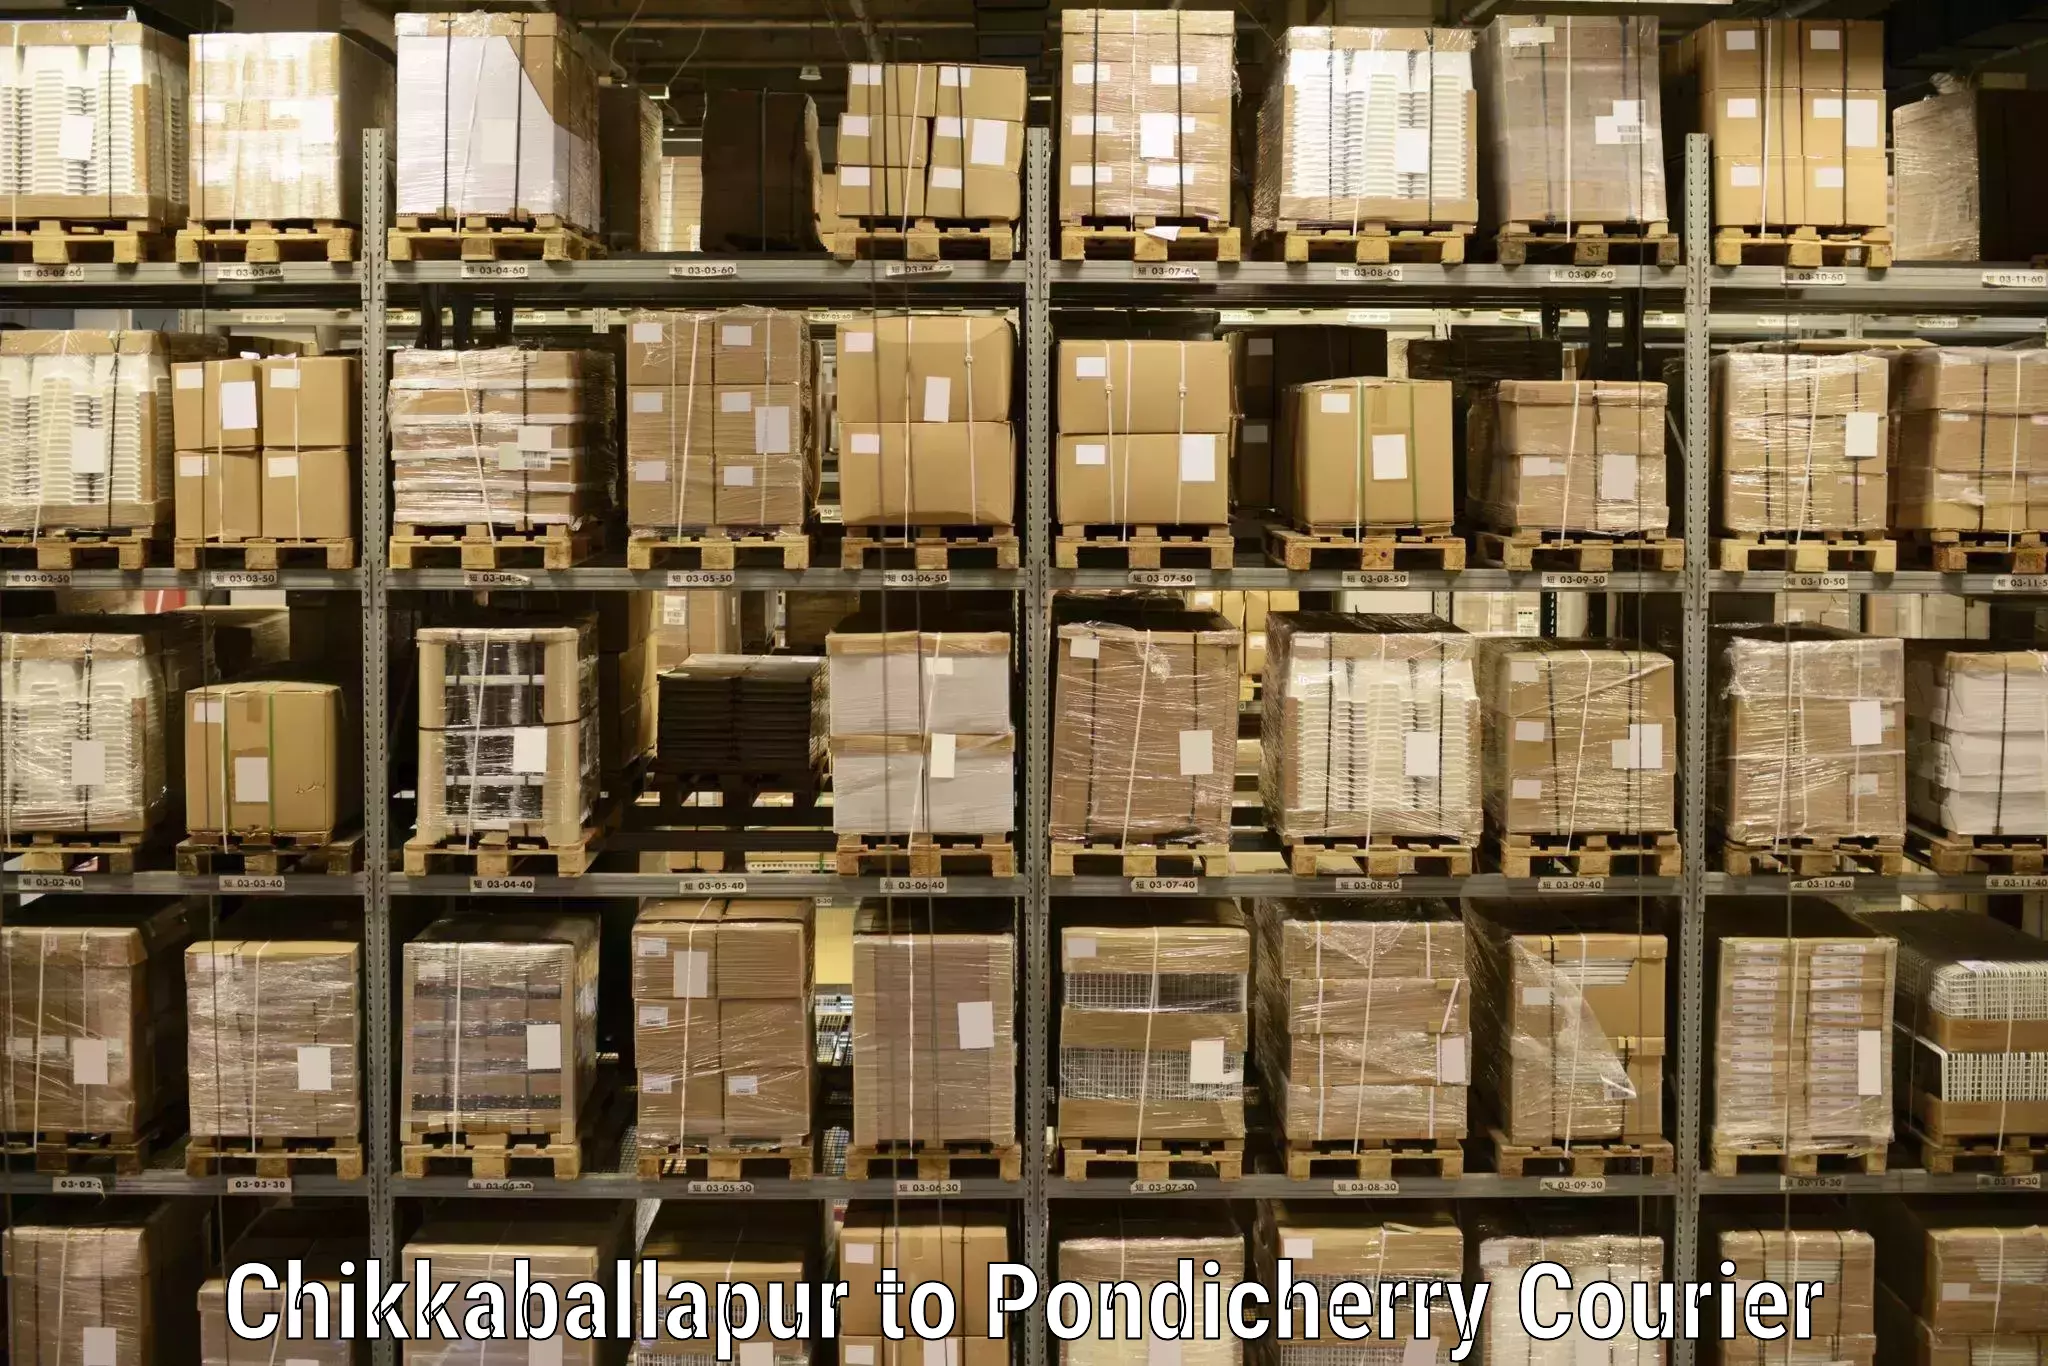 Logistics service provider Chikkaballapur to Pondicherry